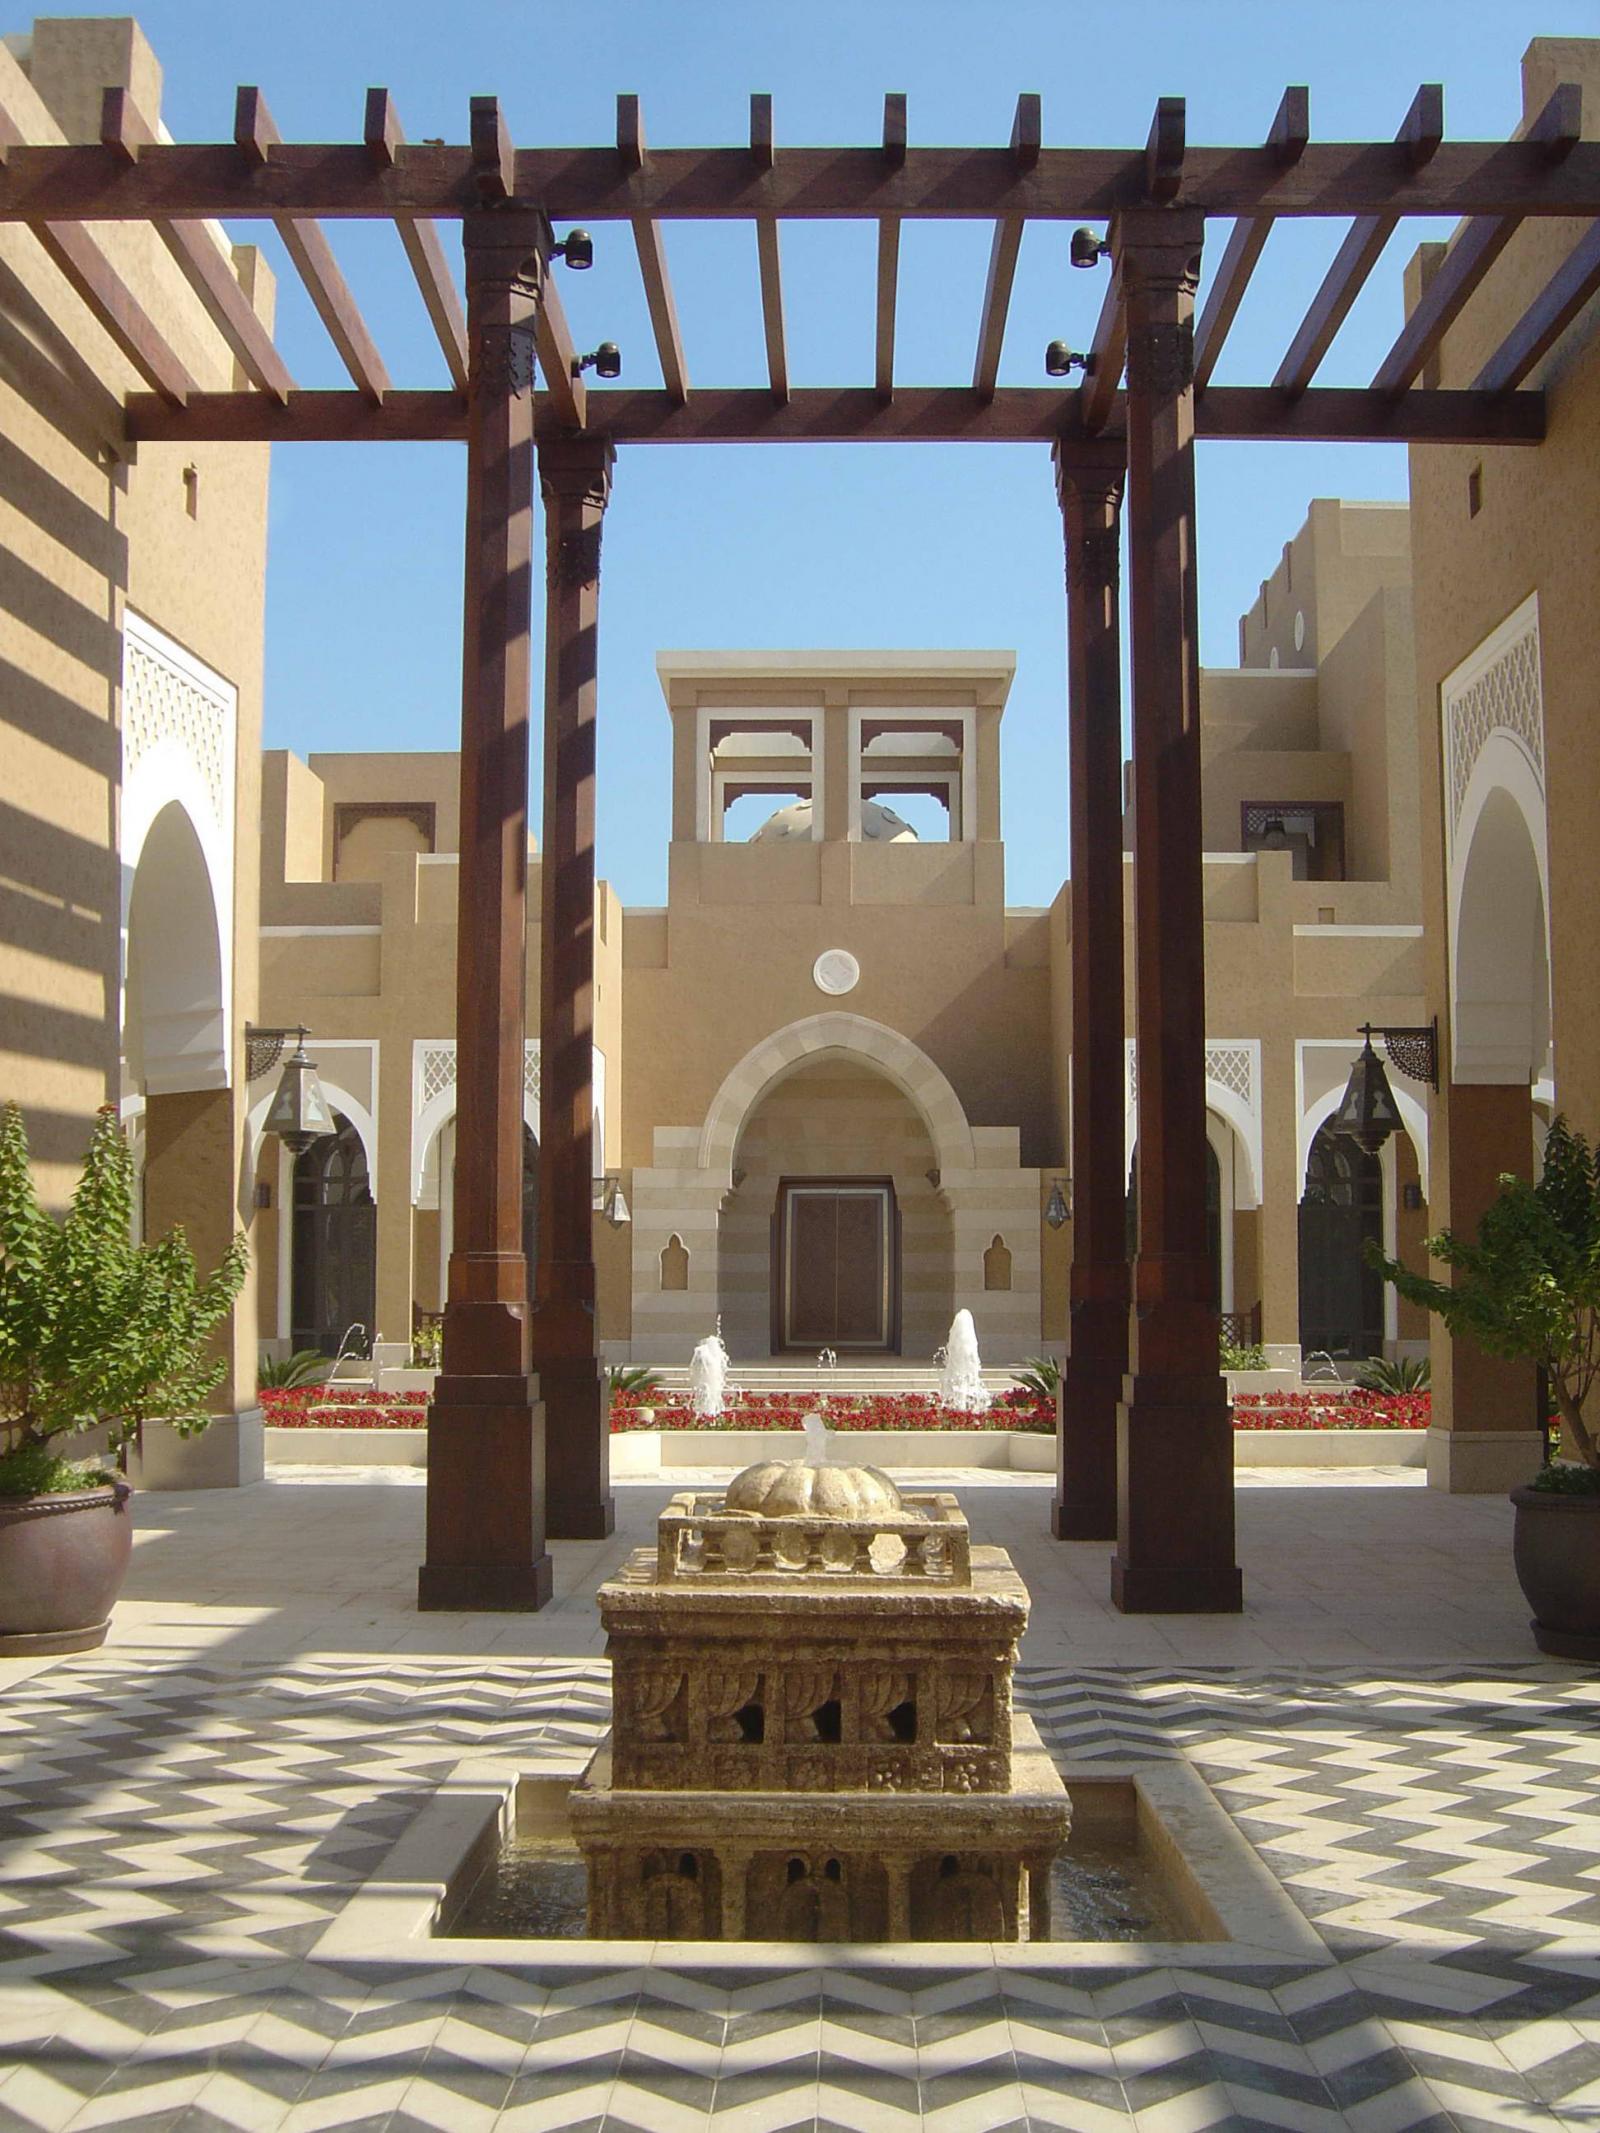 Al-Marzouk Residences